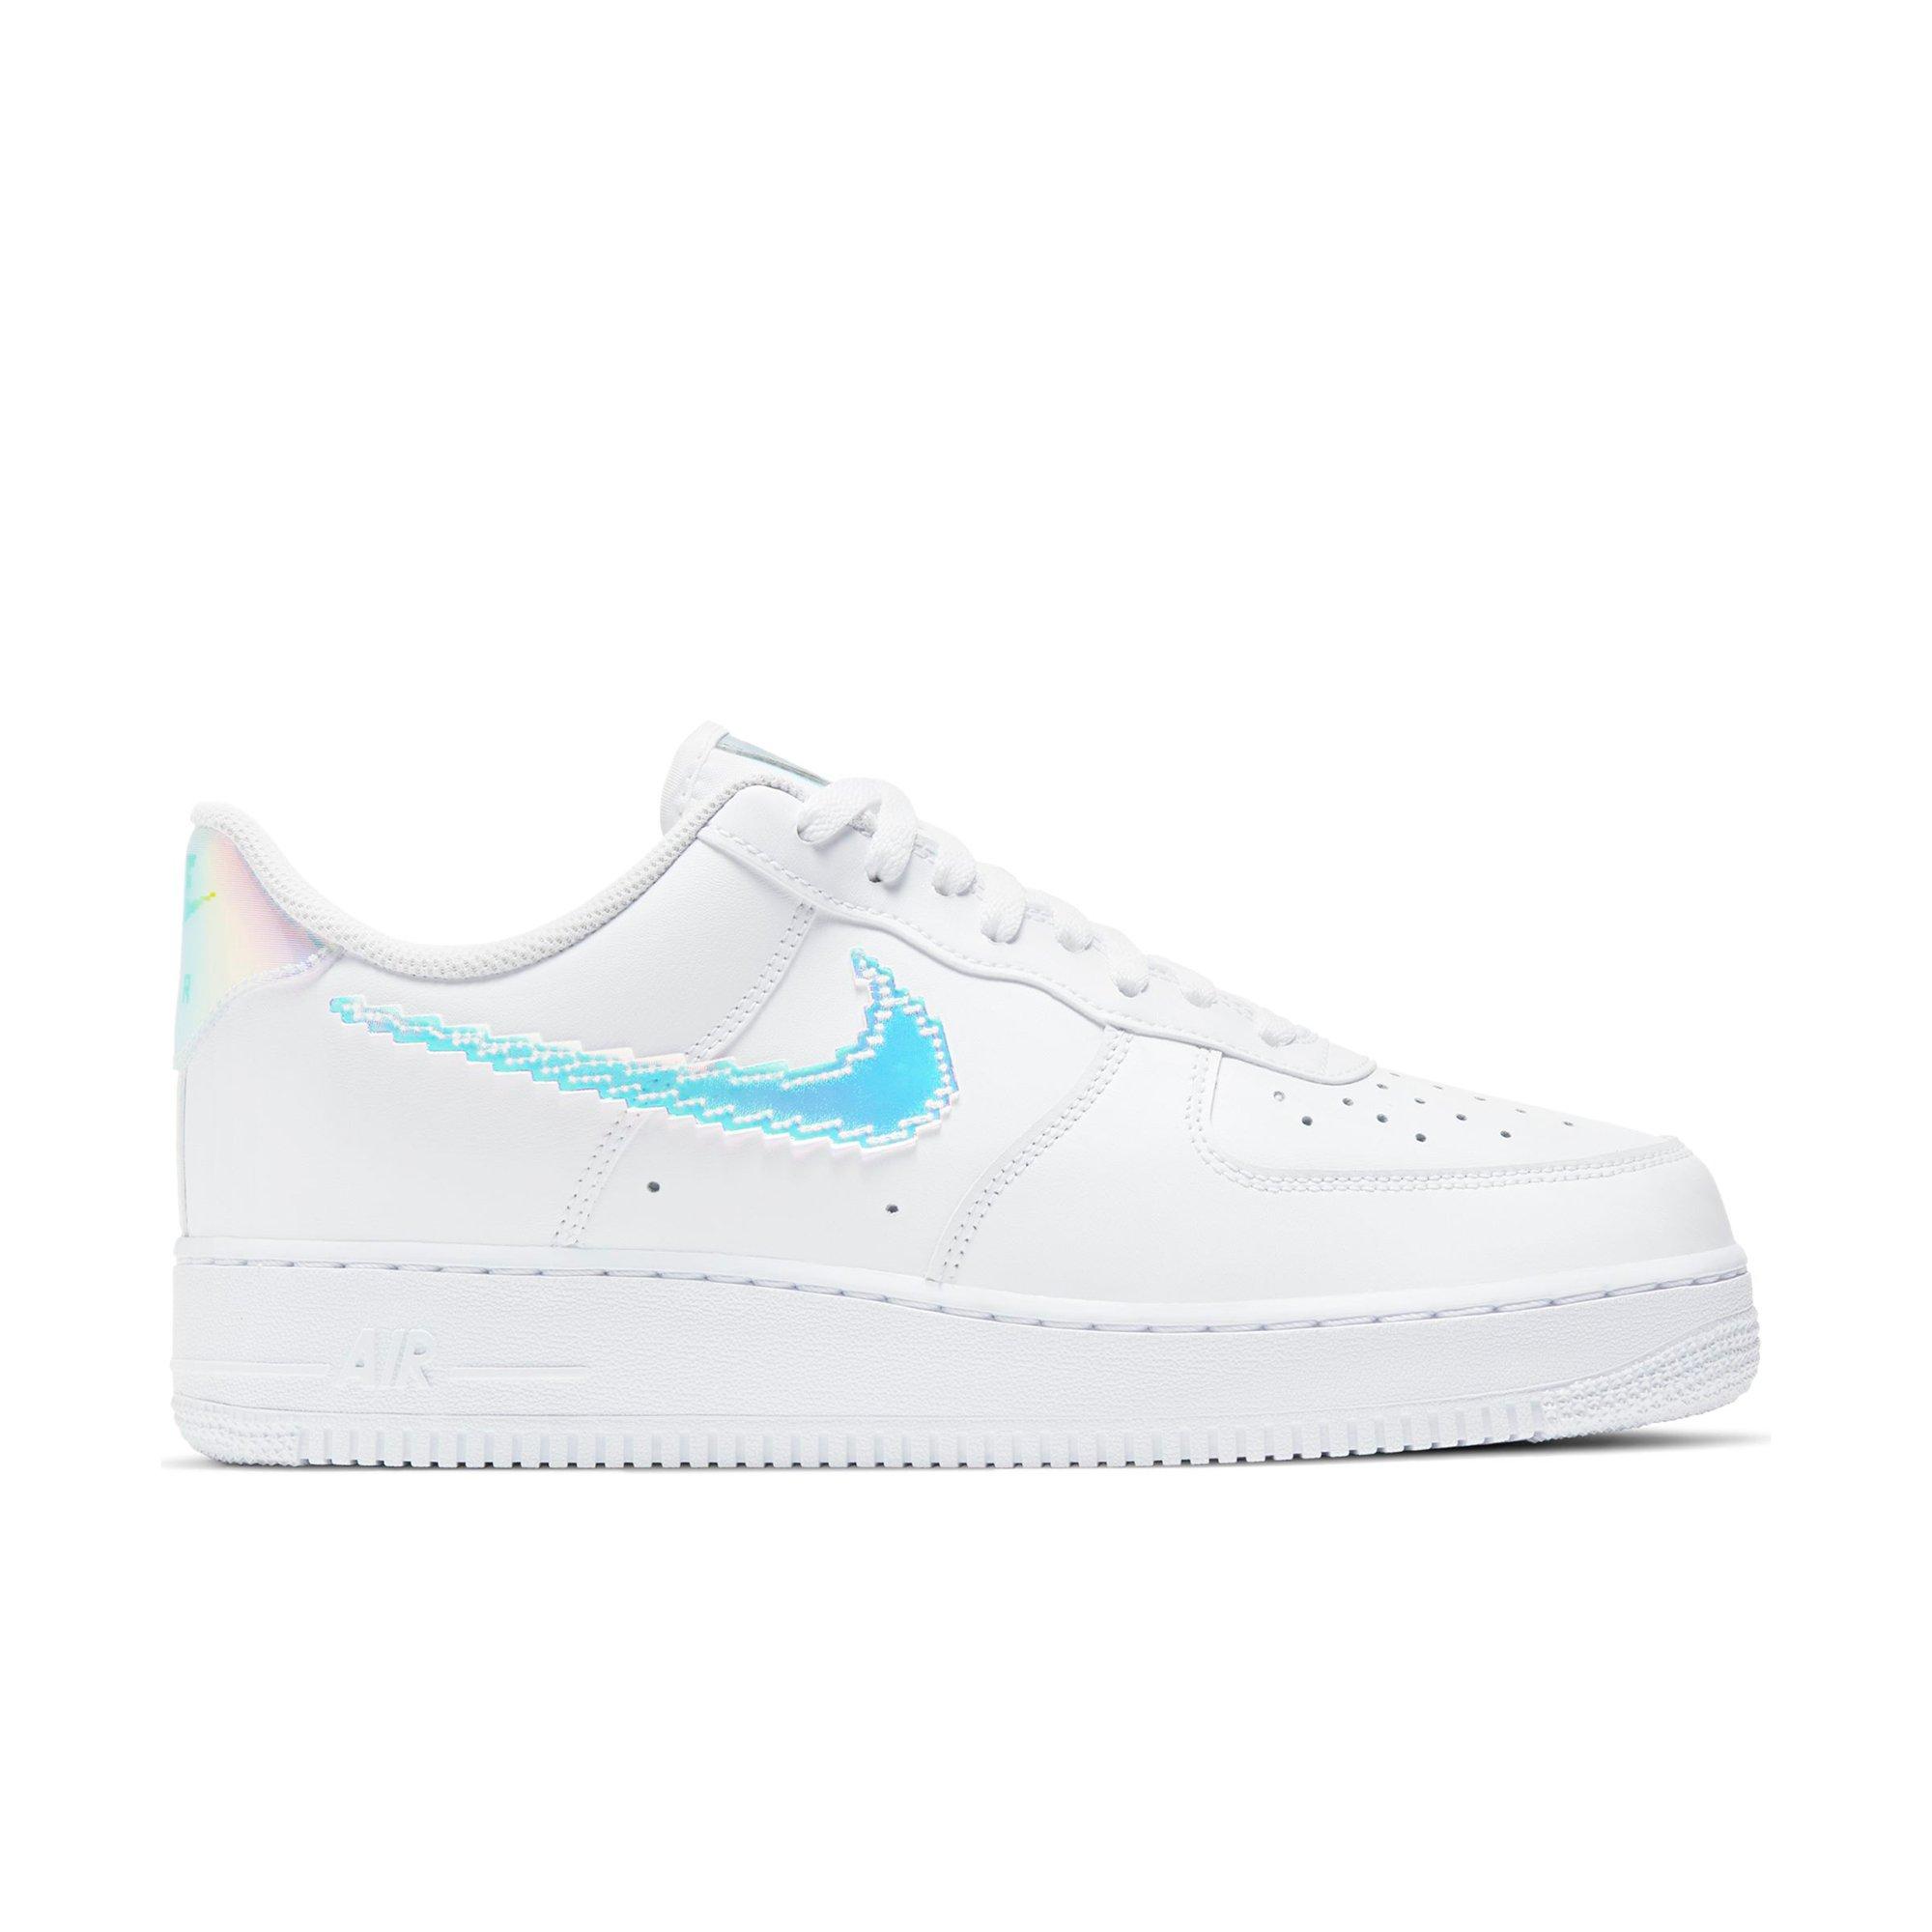 Nike Air Force 1 Mens 07' LV8 Sail Light Bone White Sneakers Size 13  823511-100